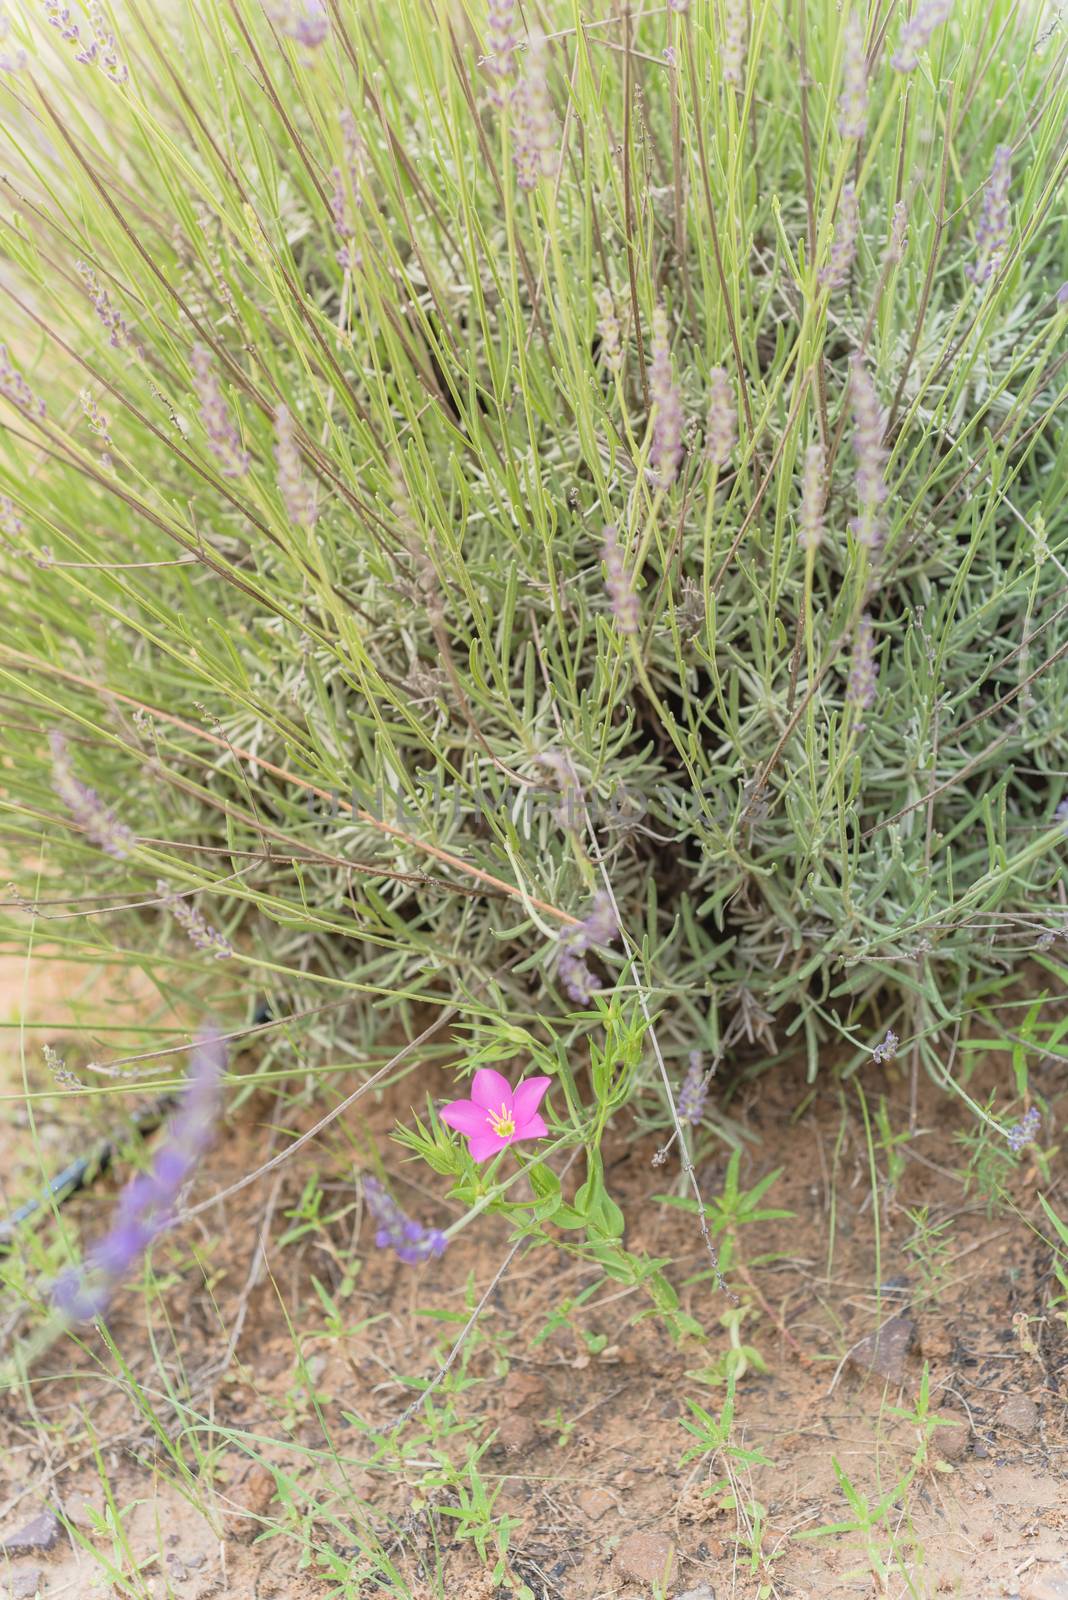 Texas wild flower and full blossom lavender bush at organic farm near Dallas by trongnguyen